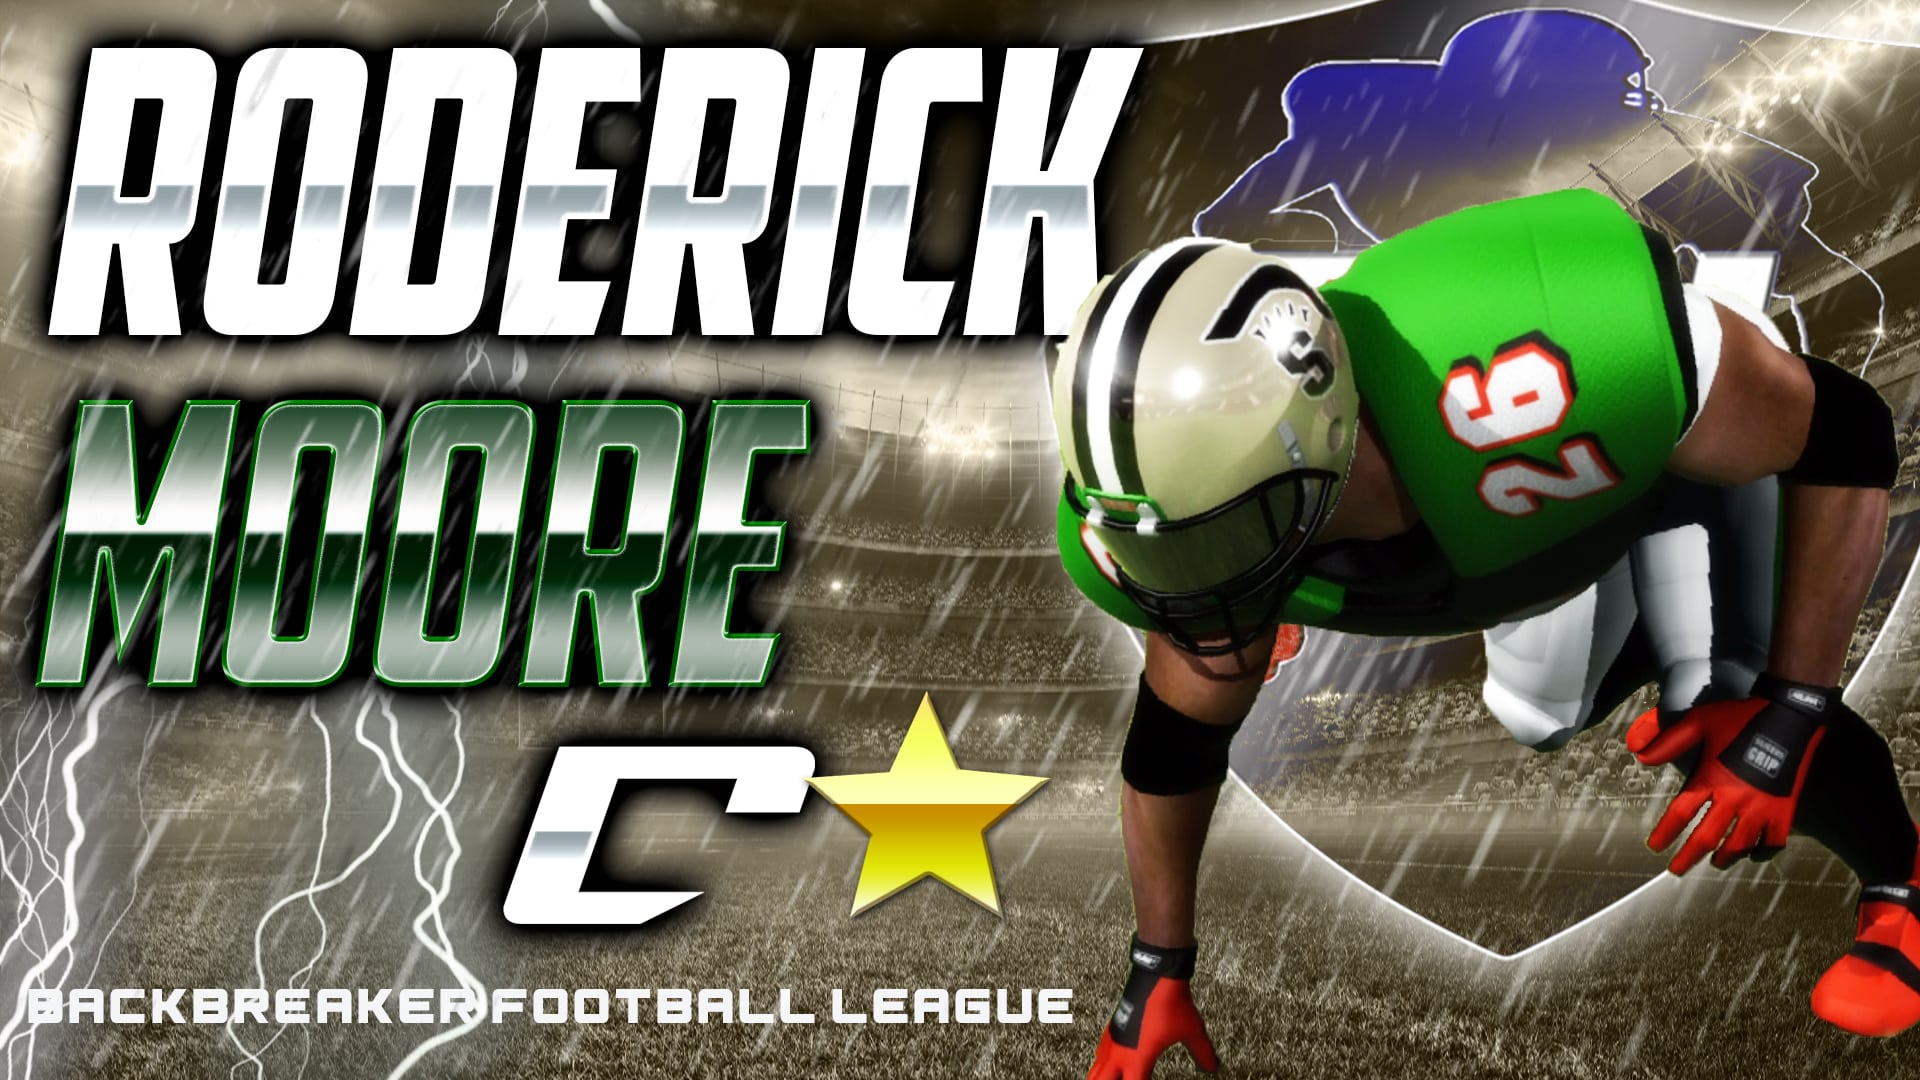 Roderick Moore Backbreaker Football League Team Captain